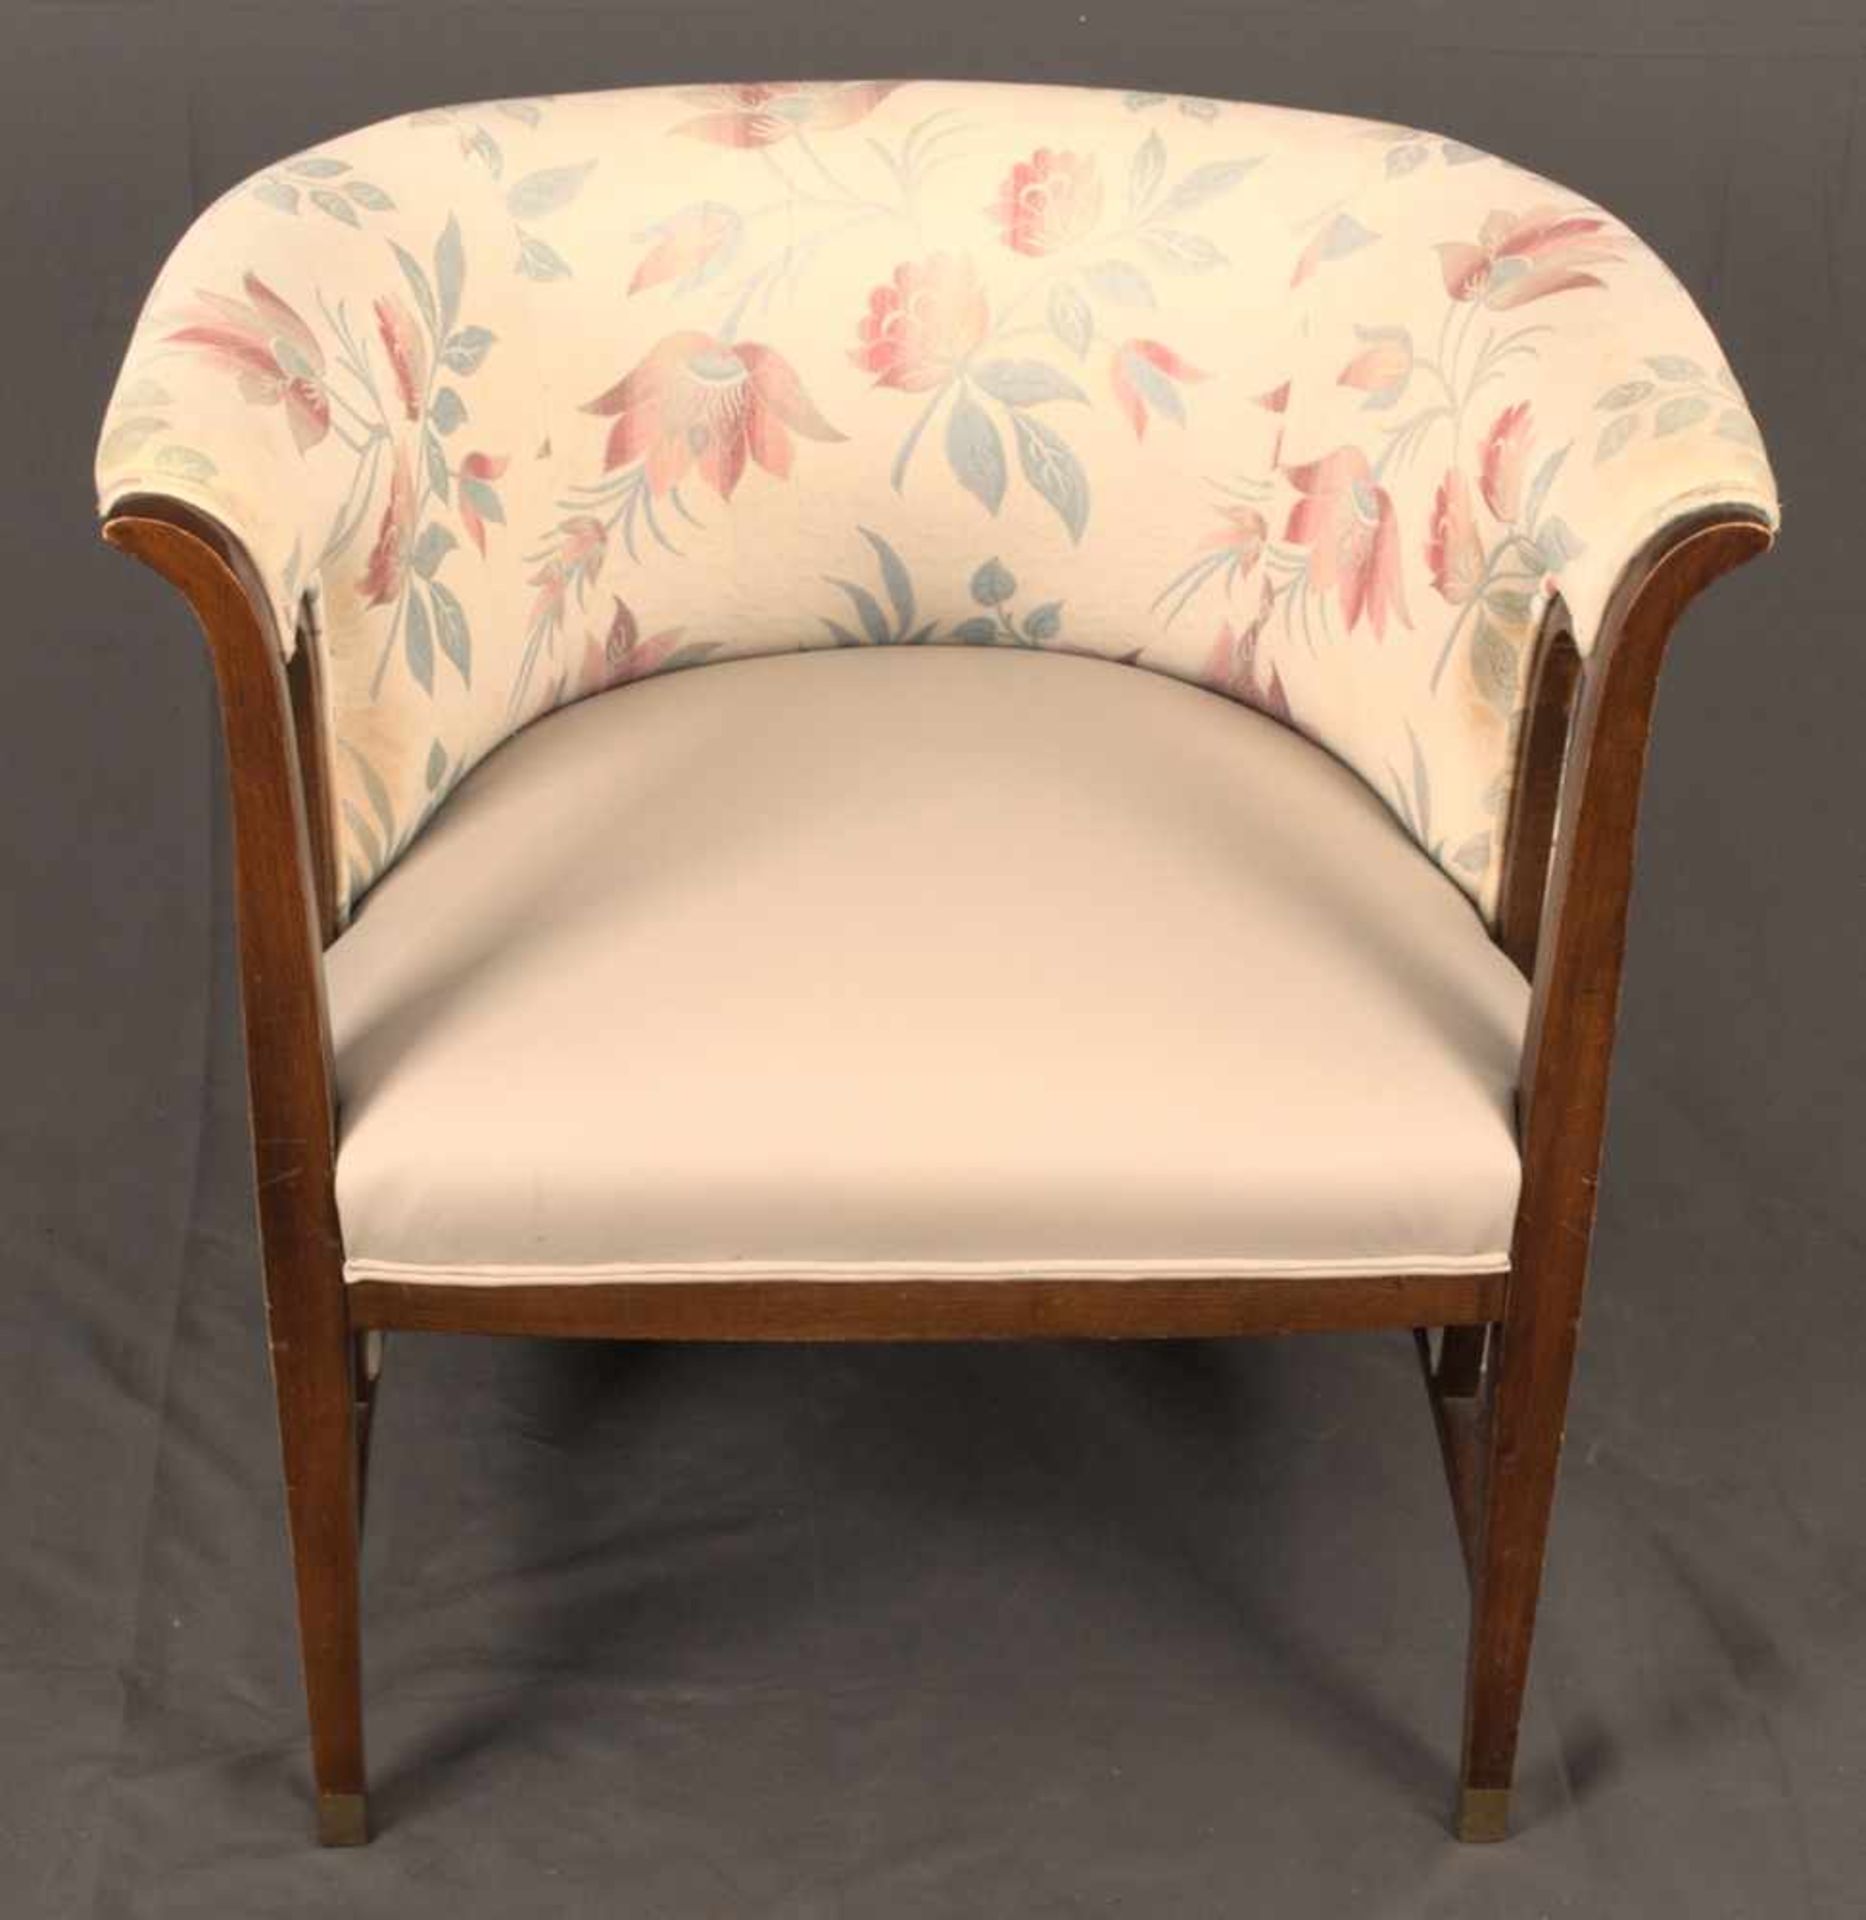 Wiener Polstersessel, hufeisenförmiges, gepolstertes Sesselgestell mit geraden, knatigen Beinen (die - Image 18 of 19